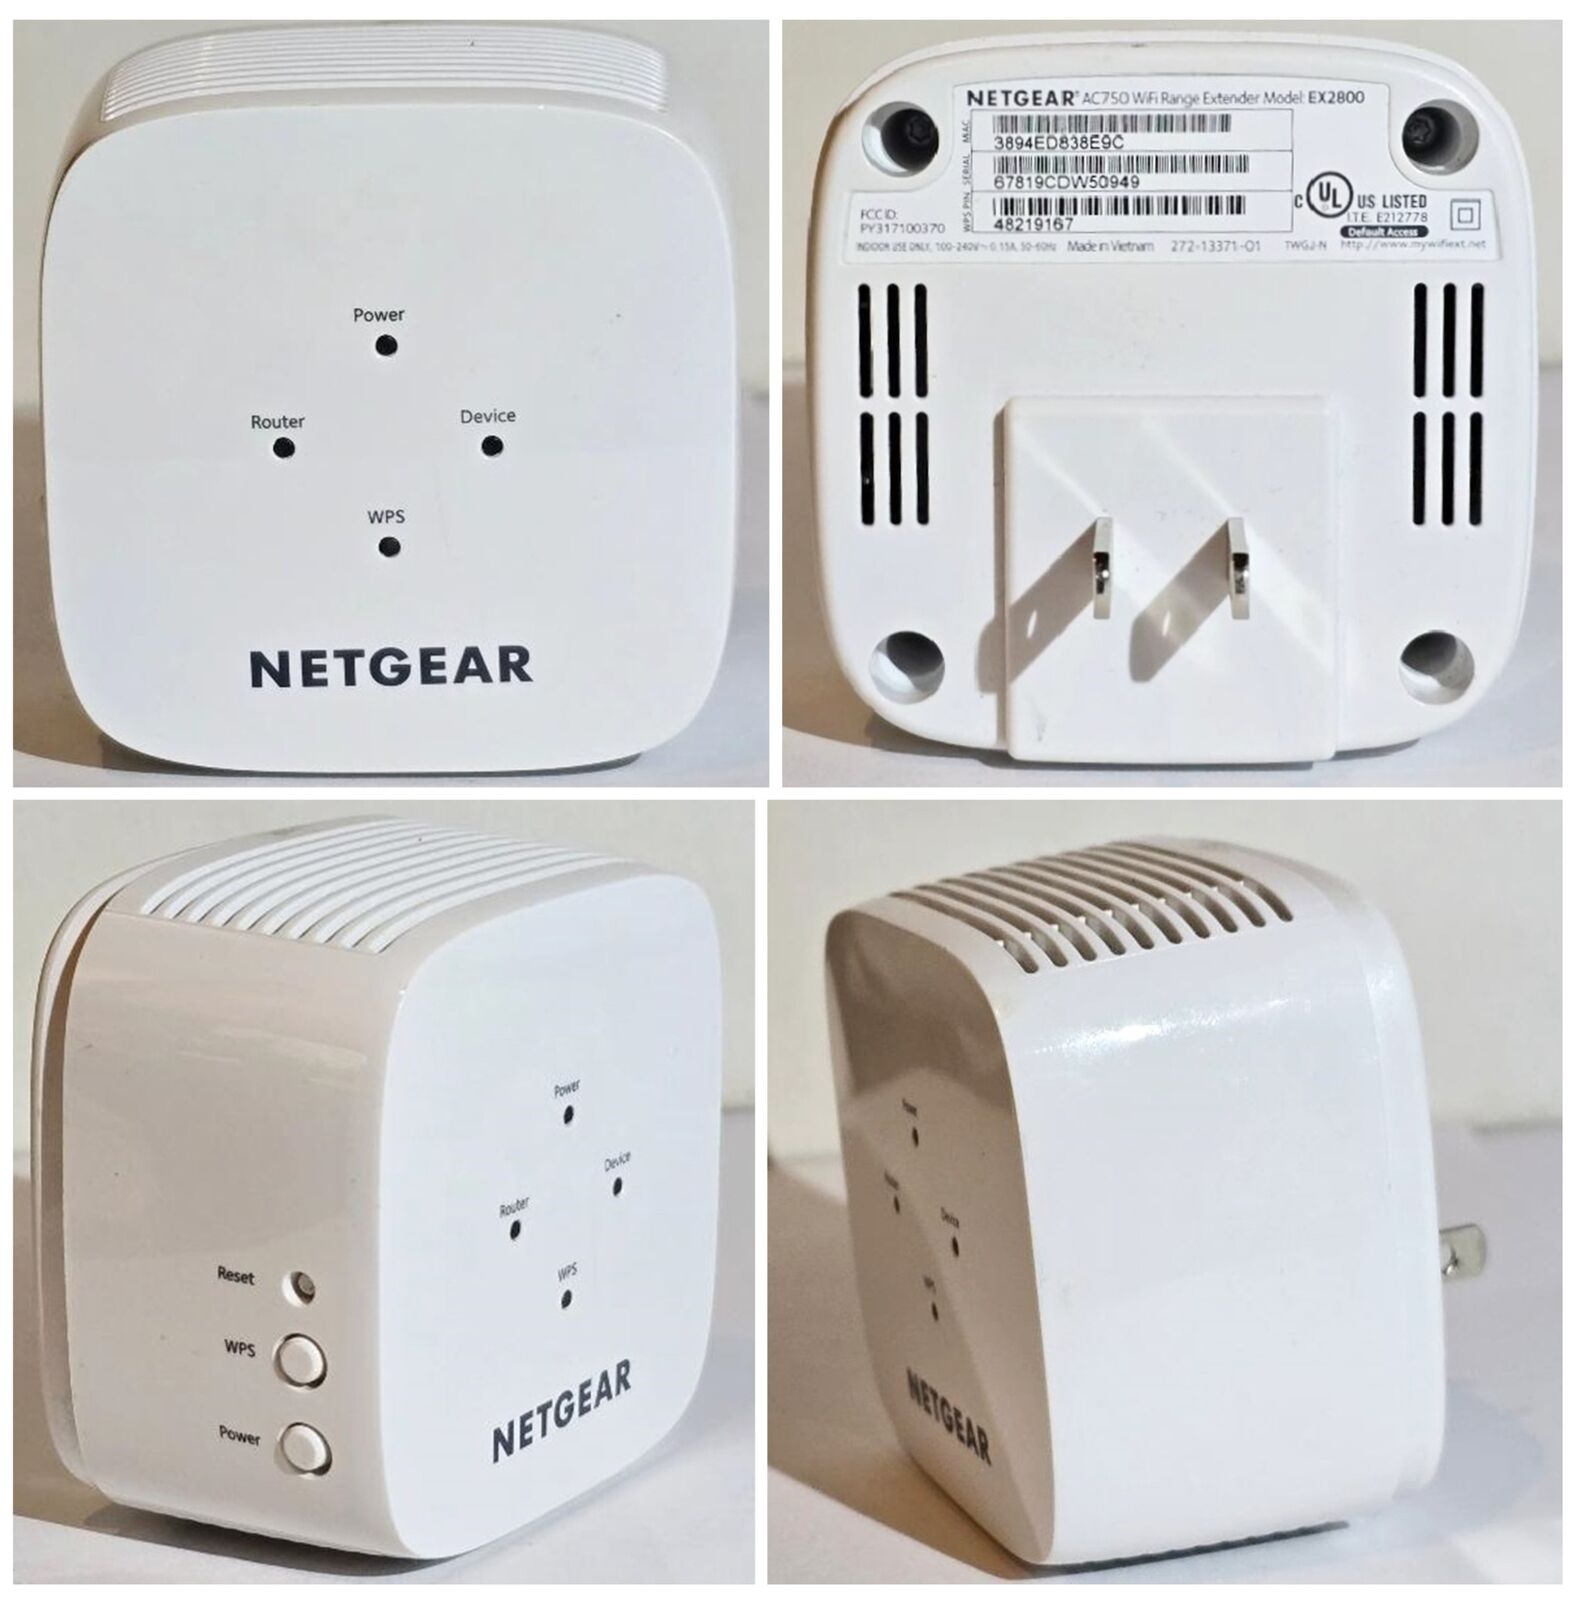 NETGEAR EX2800 WiFi Range Extender White AC750 Preowned Unused